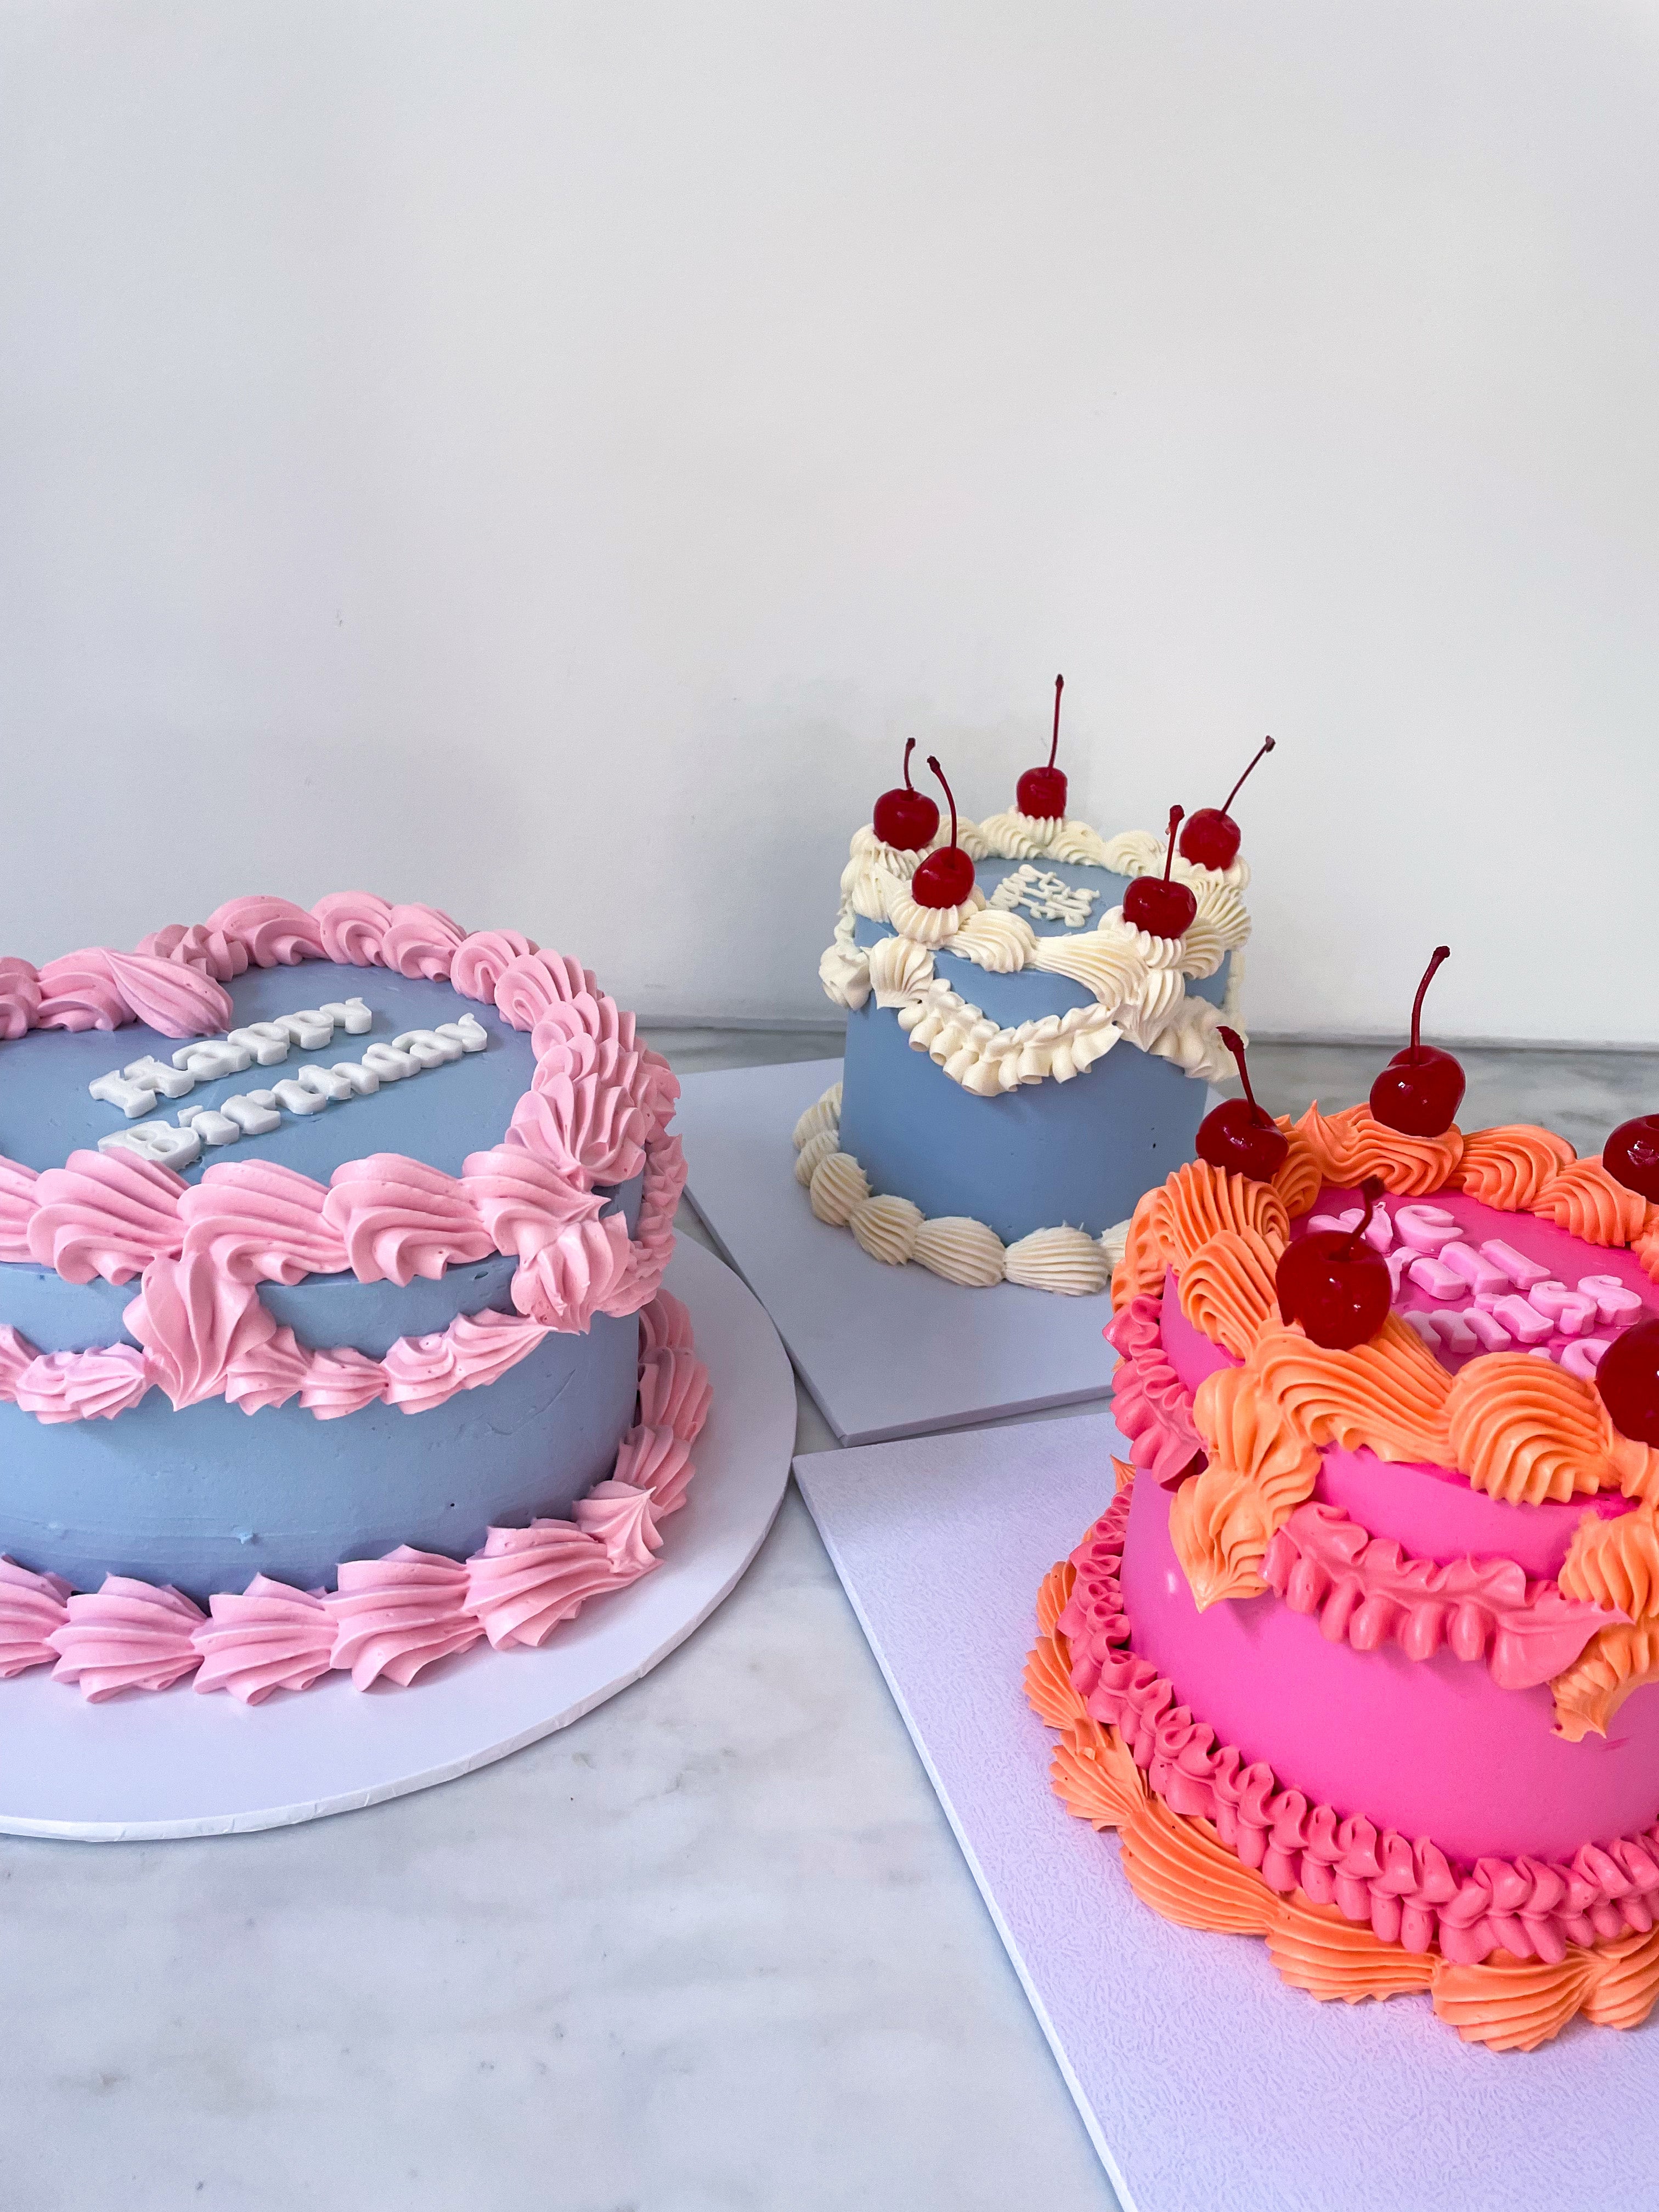 Cake For Days! - Piece Of Cake With Tigga Mac - Sydney - Cakebake & Sweets  Show